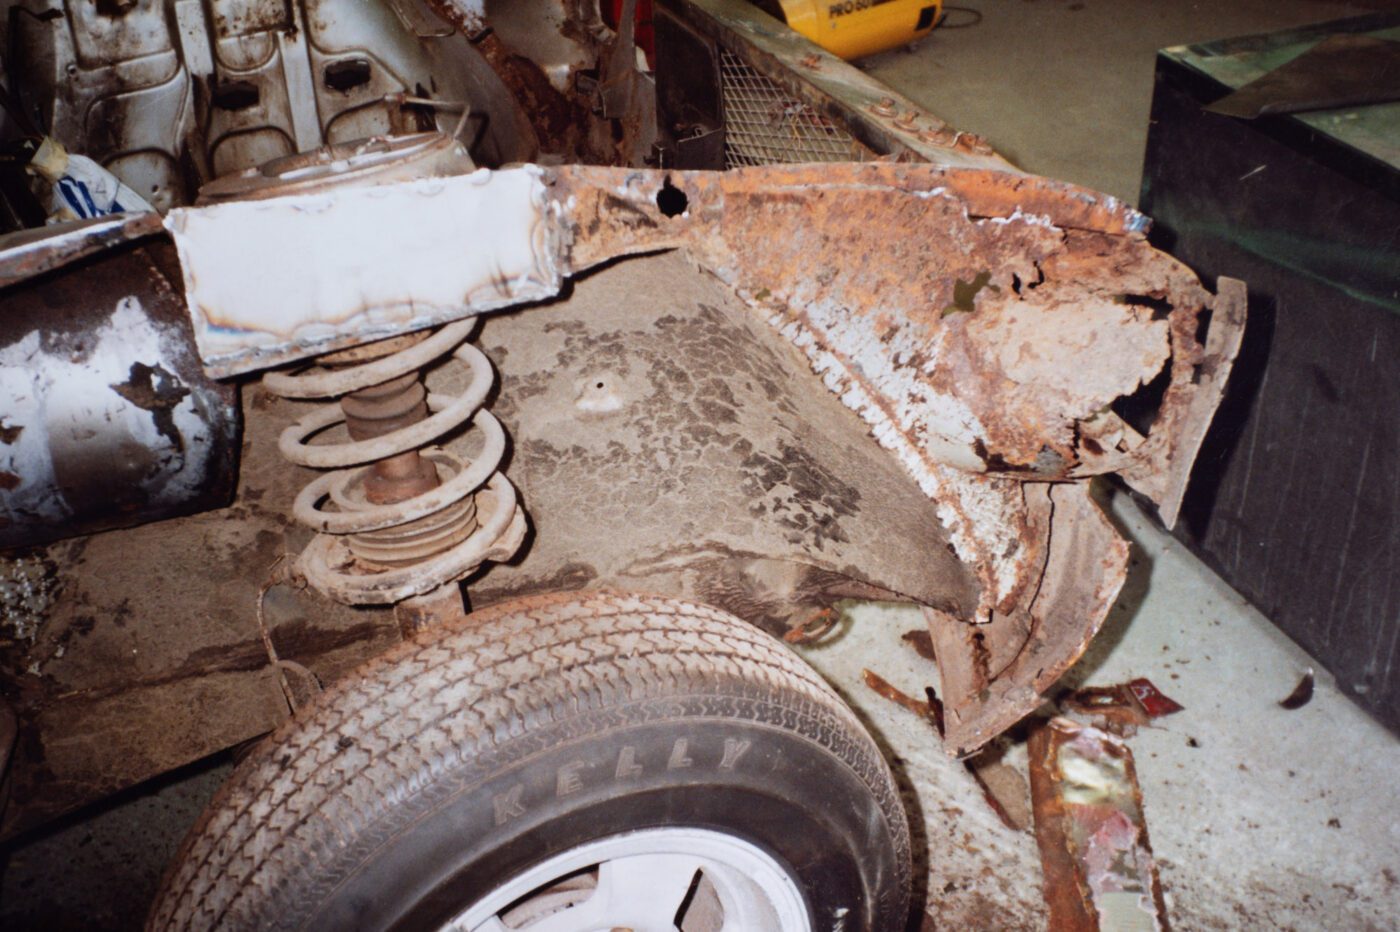 Peugeot 504 Cabriolet rotten body